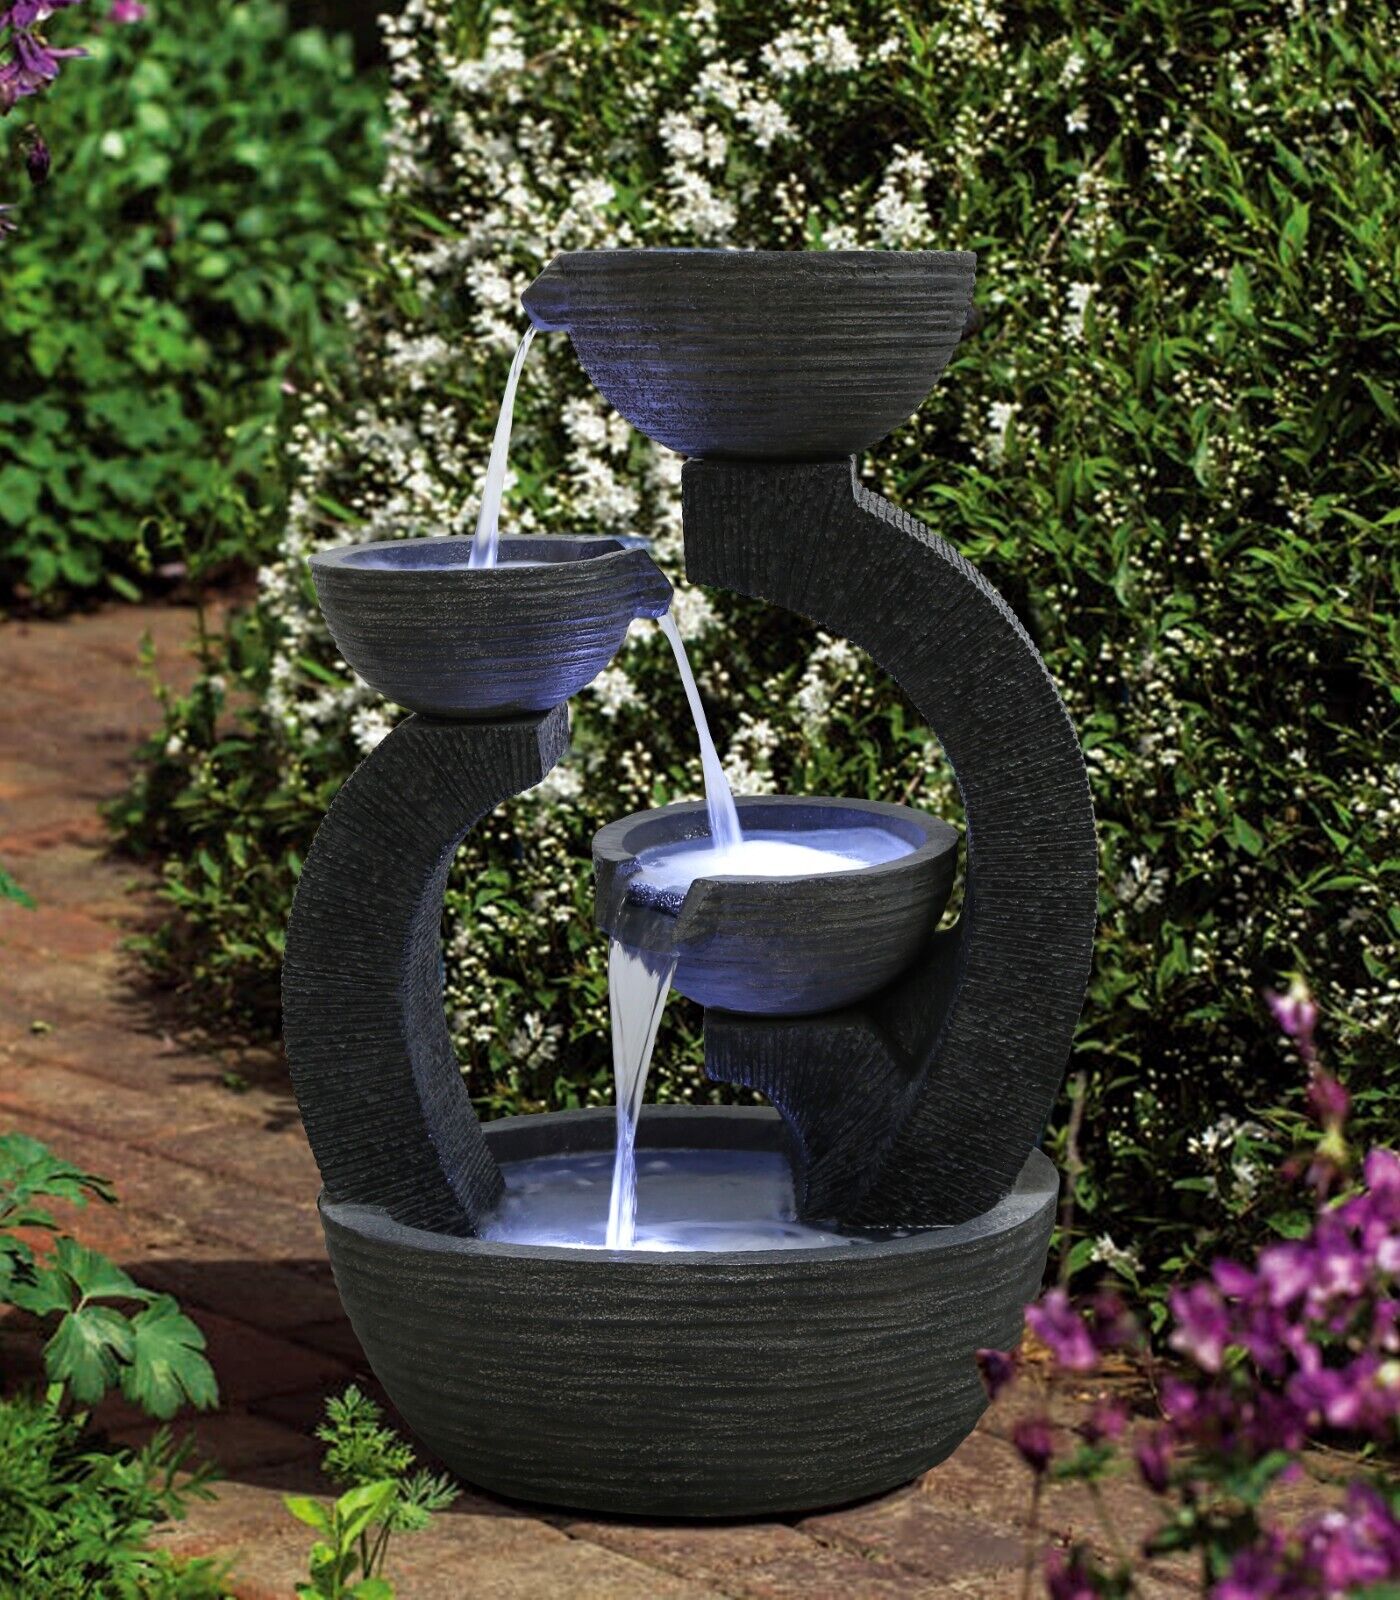 Triple Plates Water Feature Fountain backyard